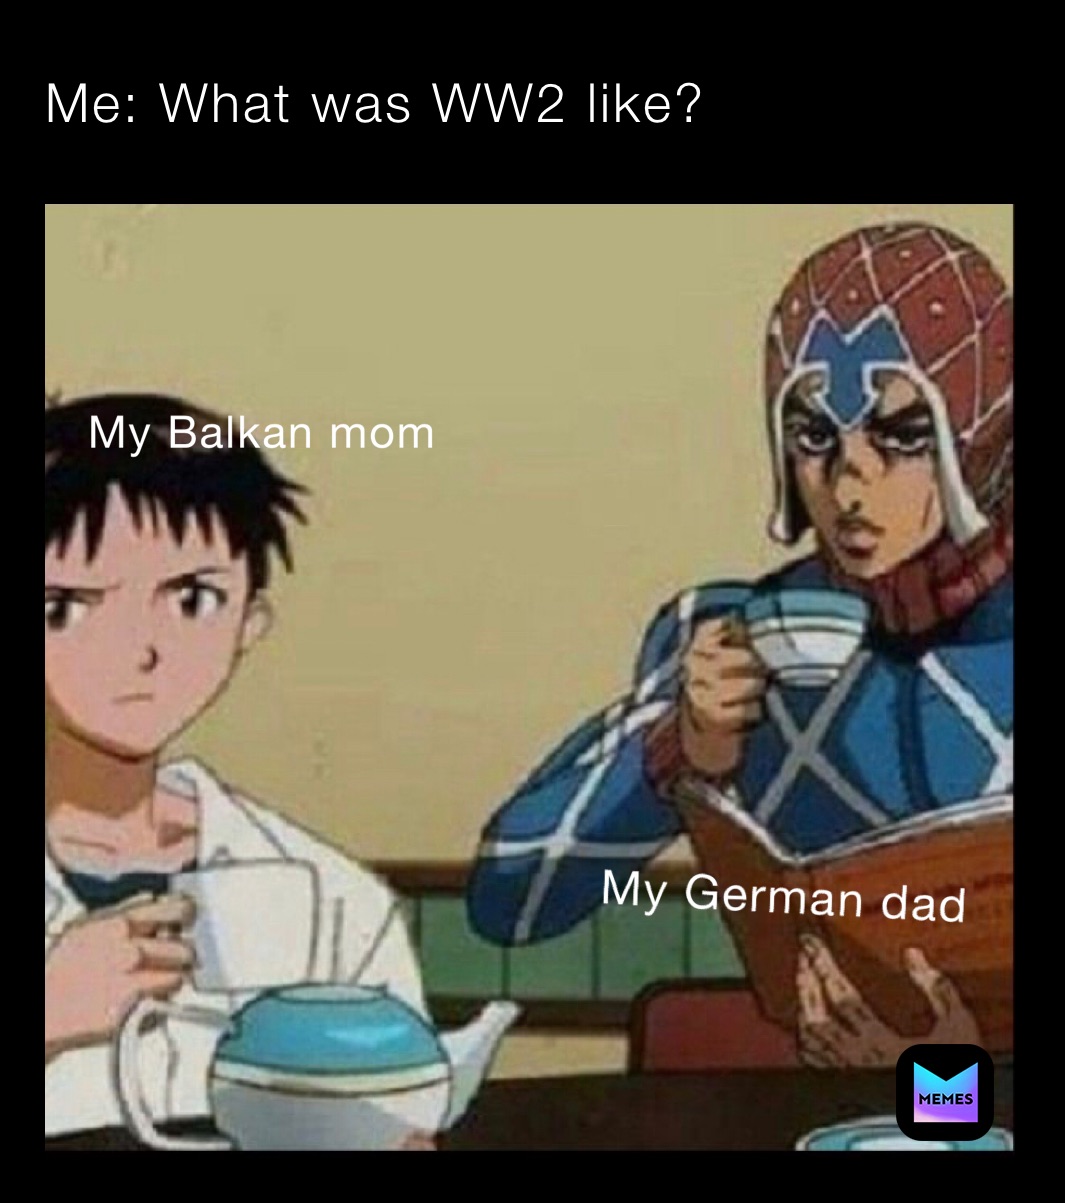 Me: What was WW2 like?